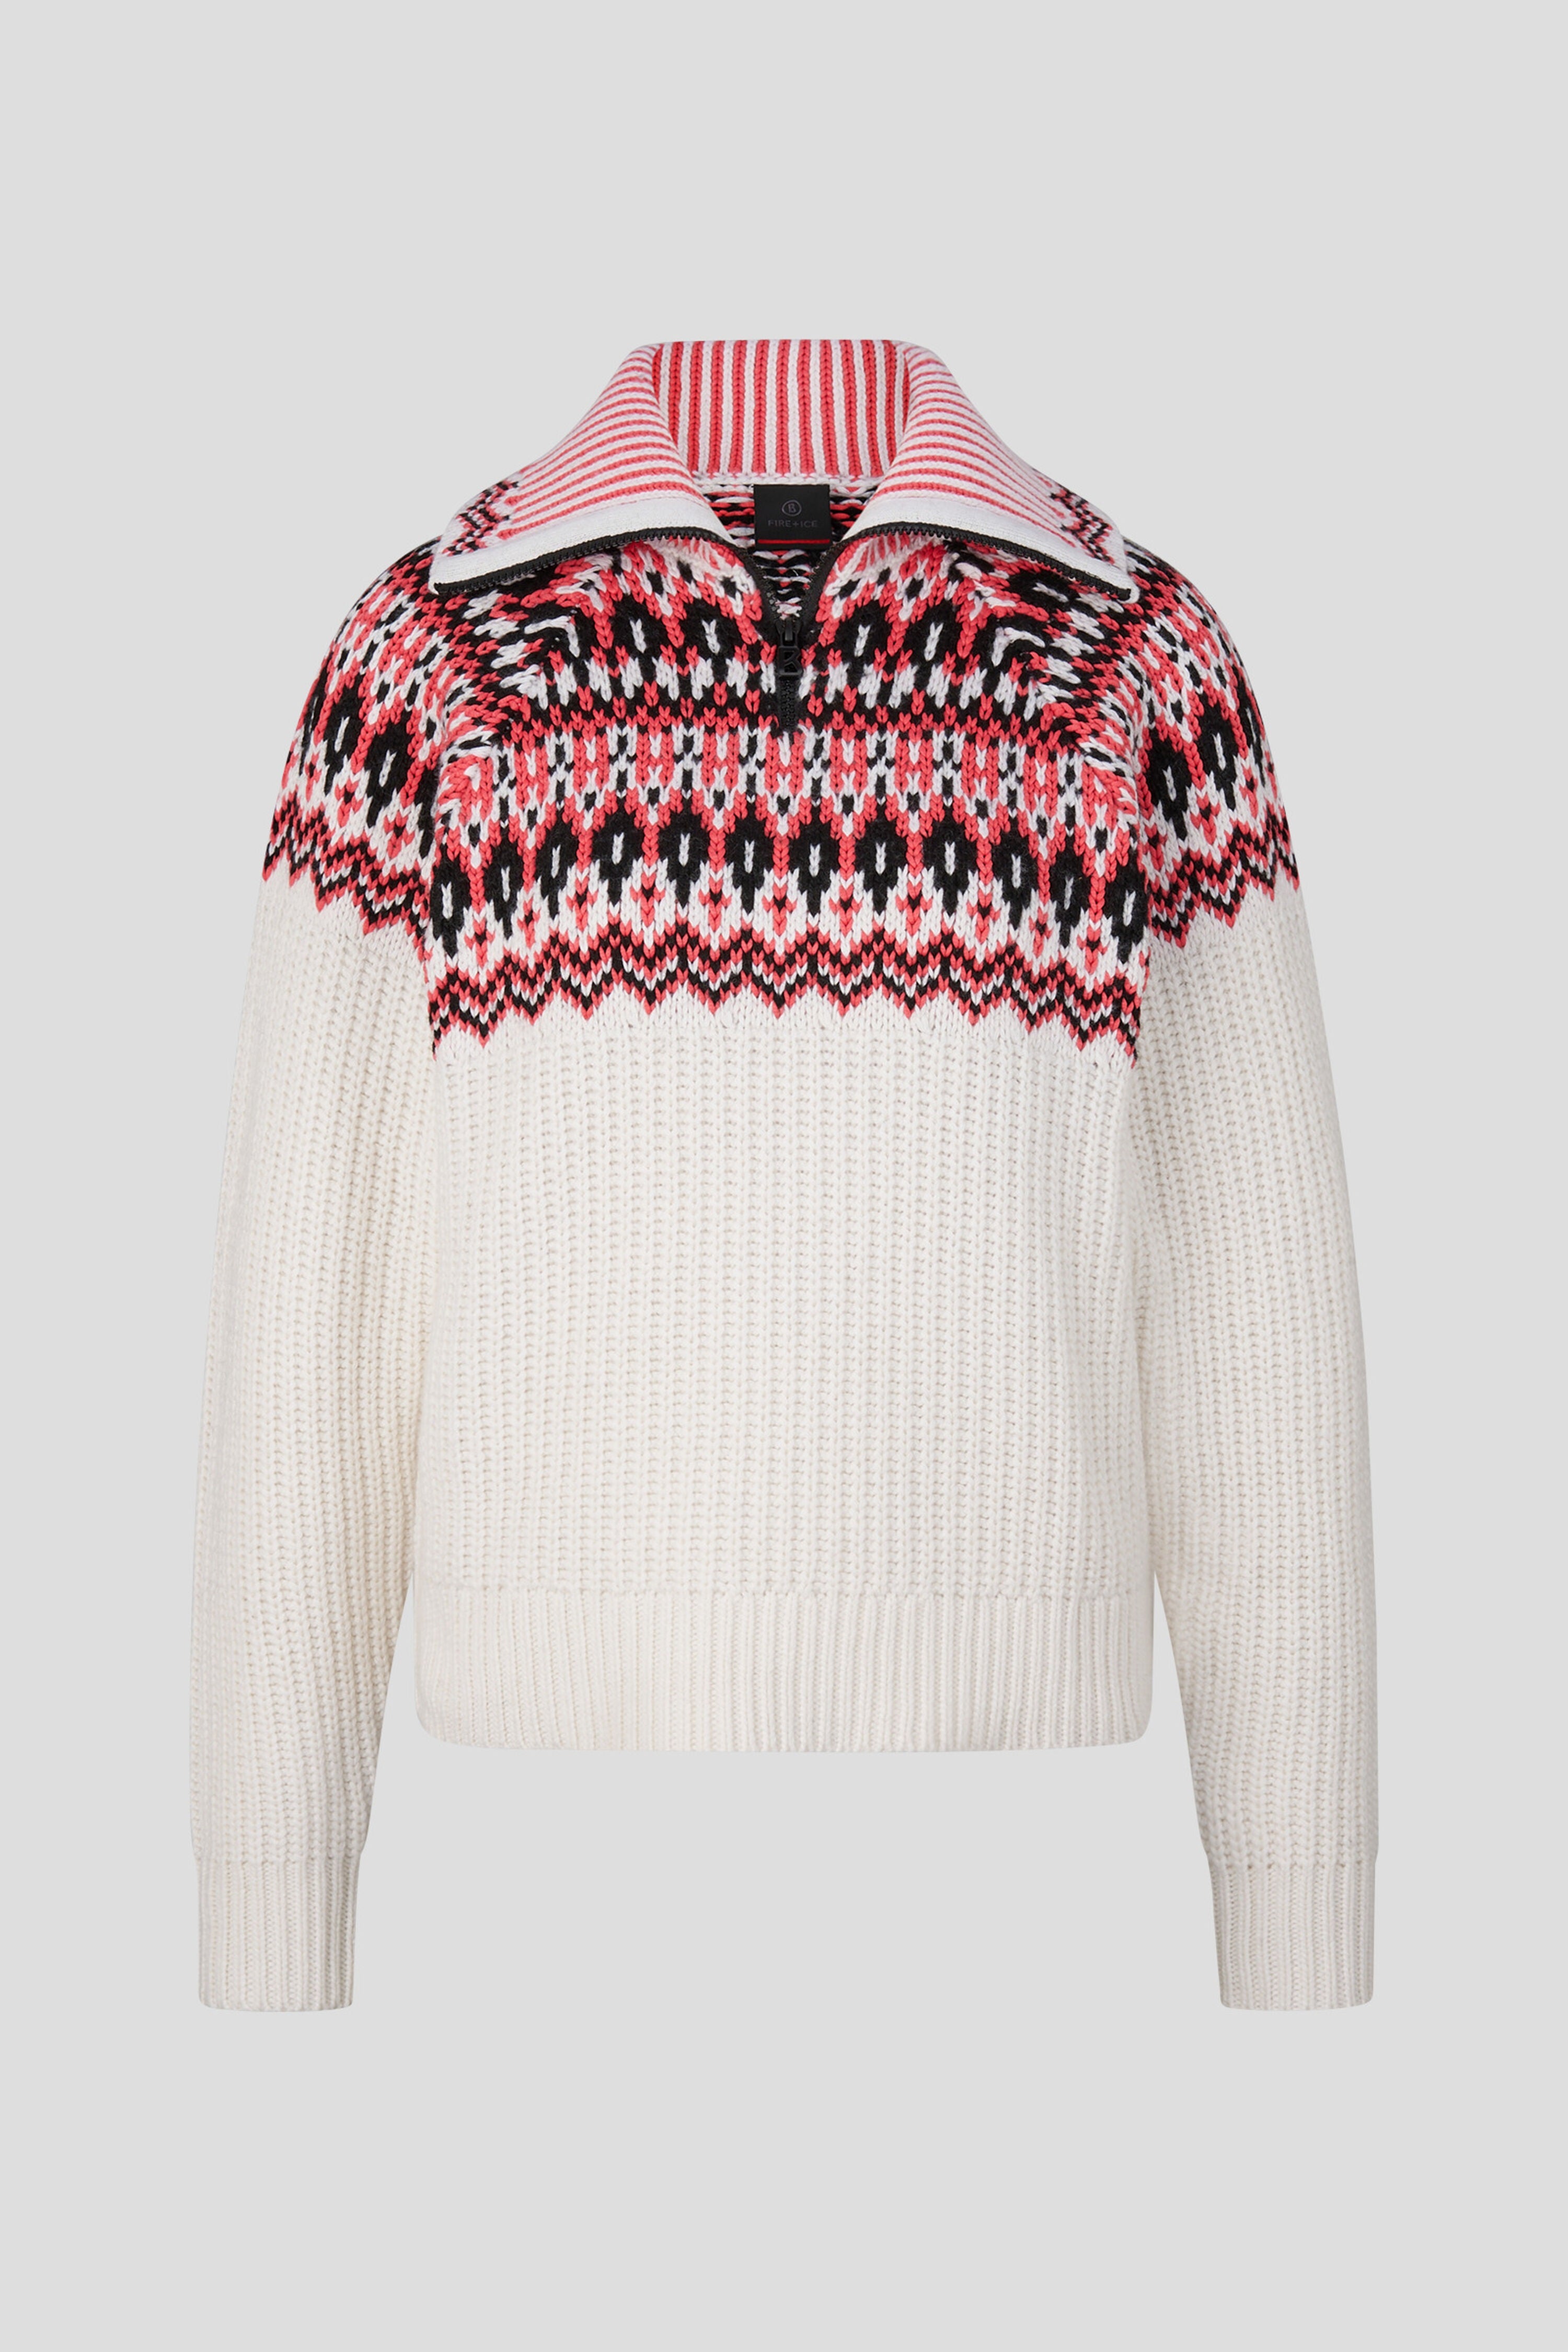 Dory half-zippered sweater